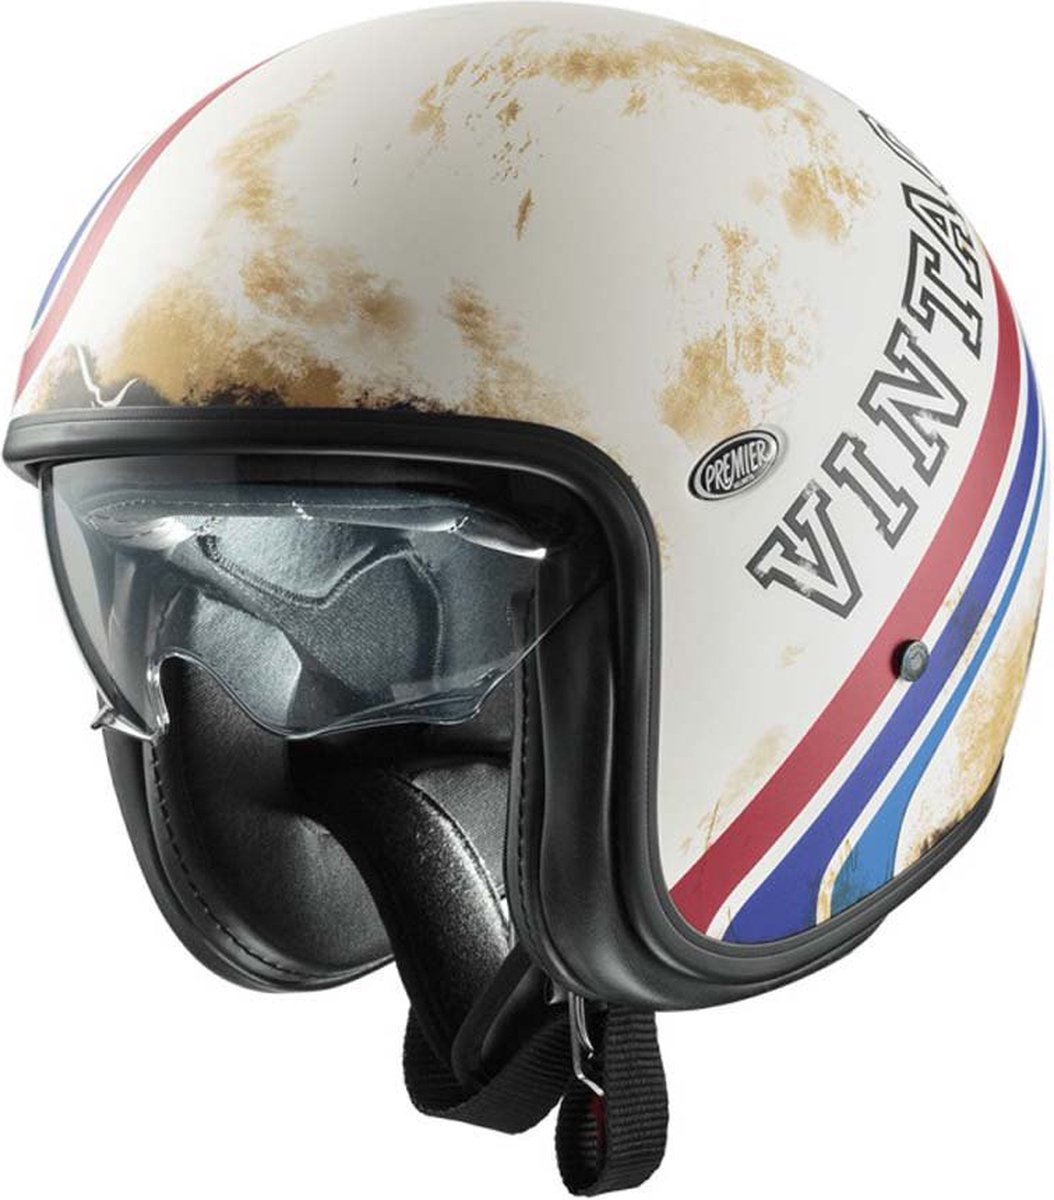 Premier Helmets 23 Vintage Btr 12 Bm 22.06 Jet Helm Wit M